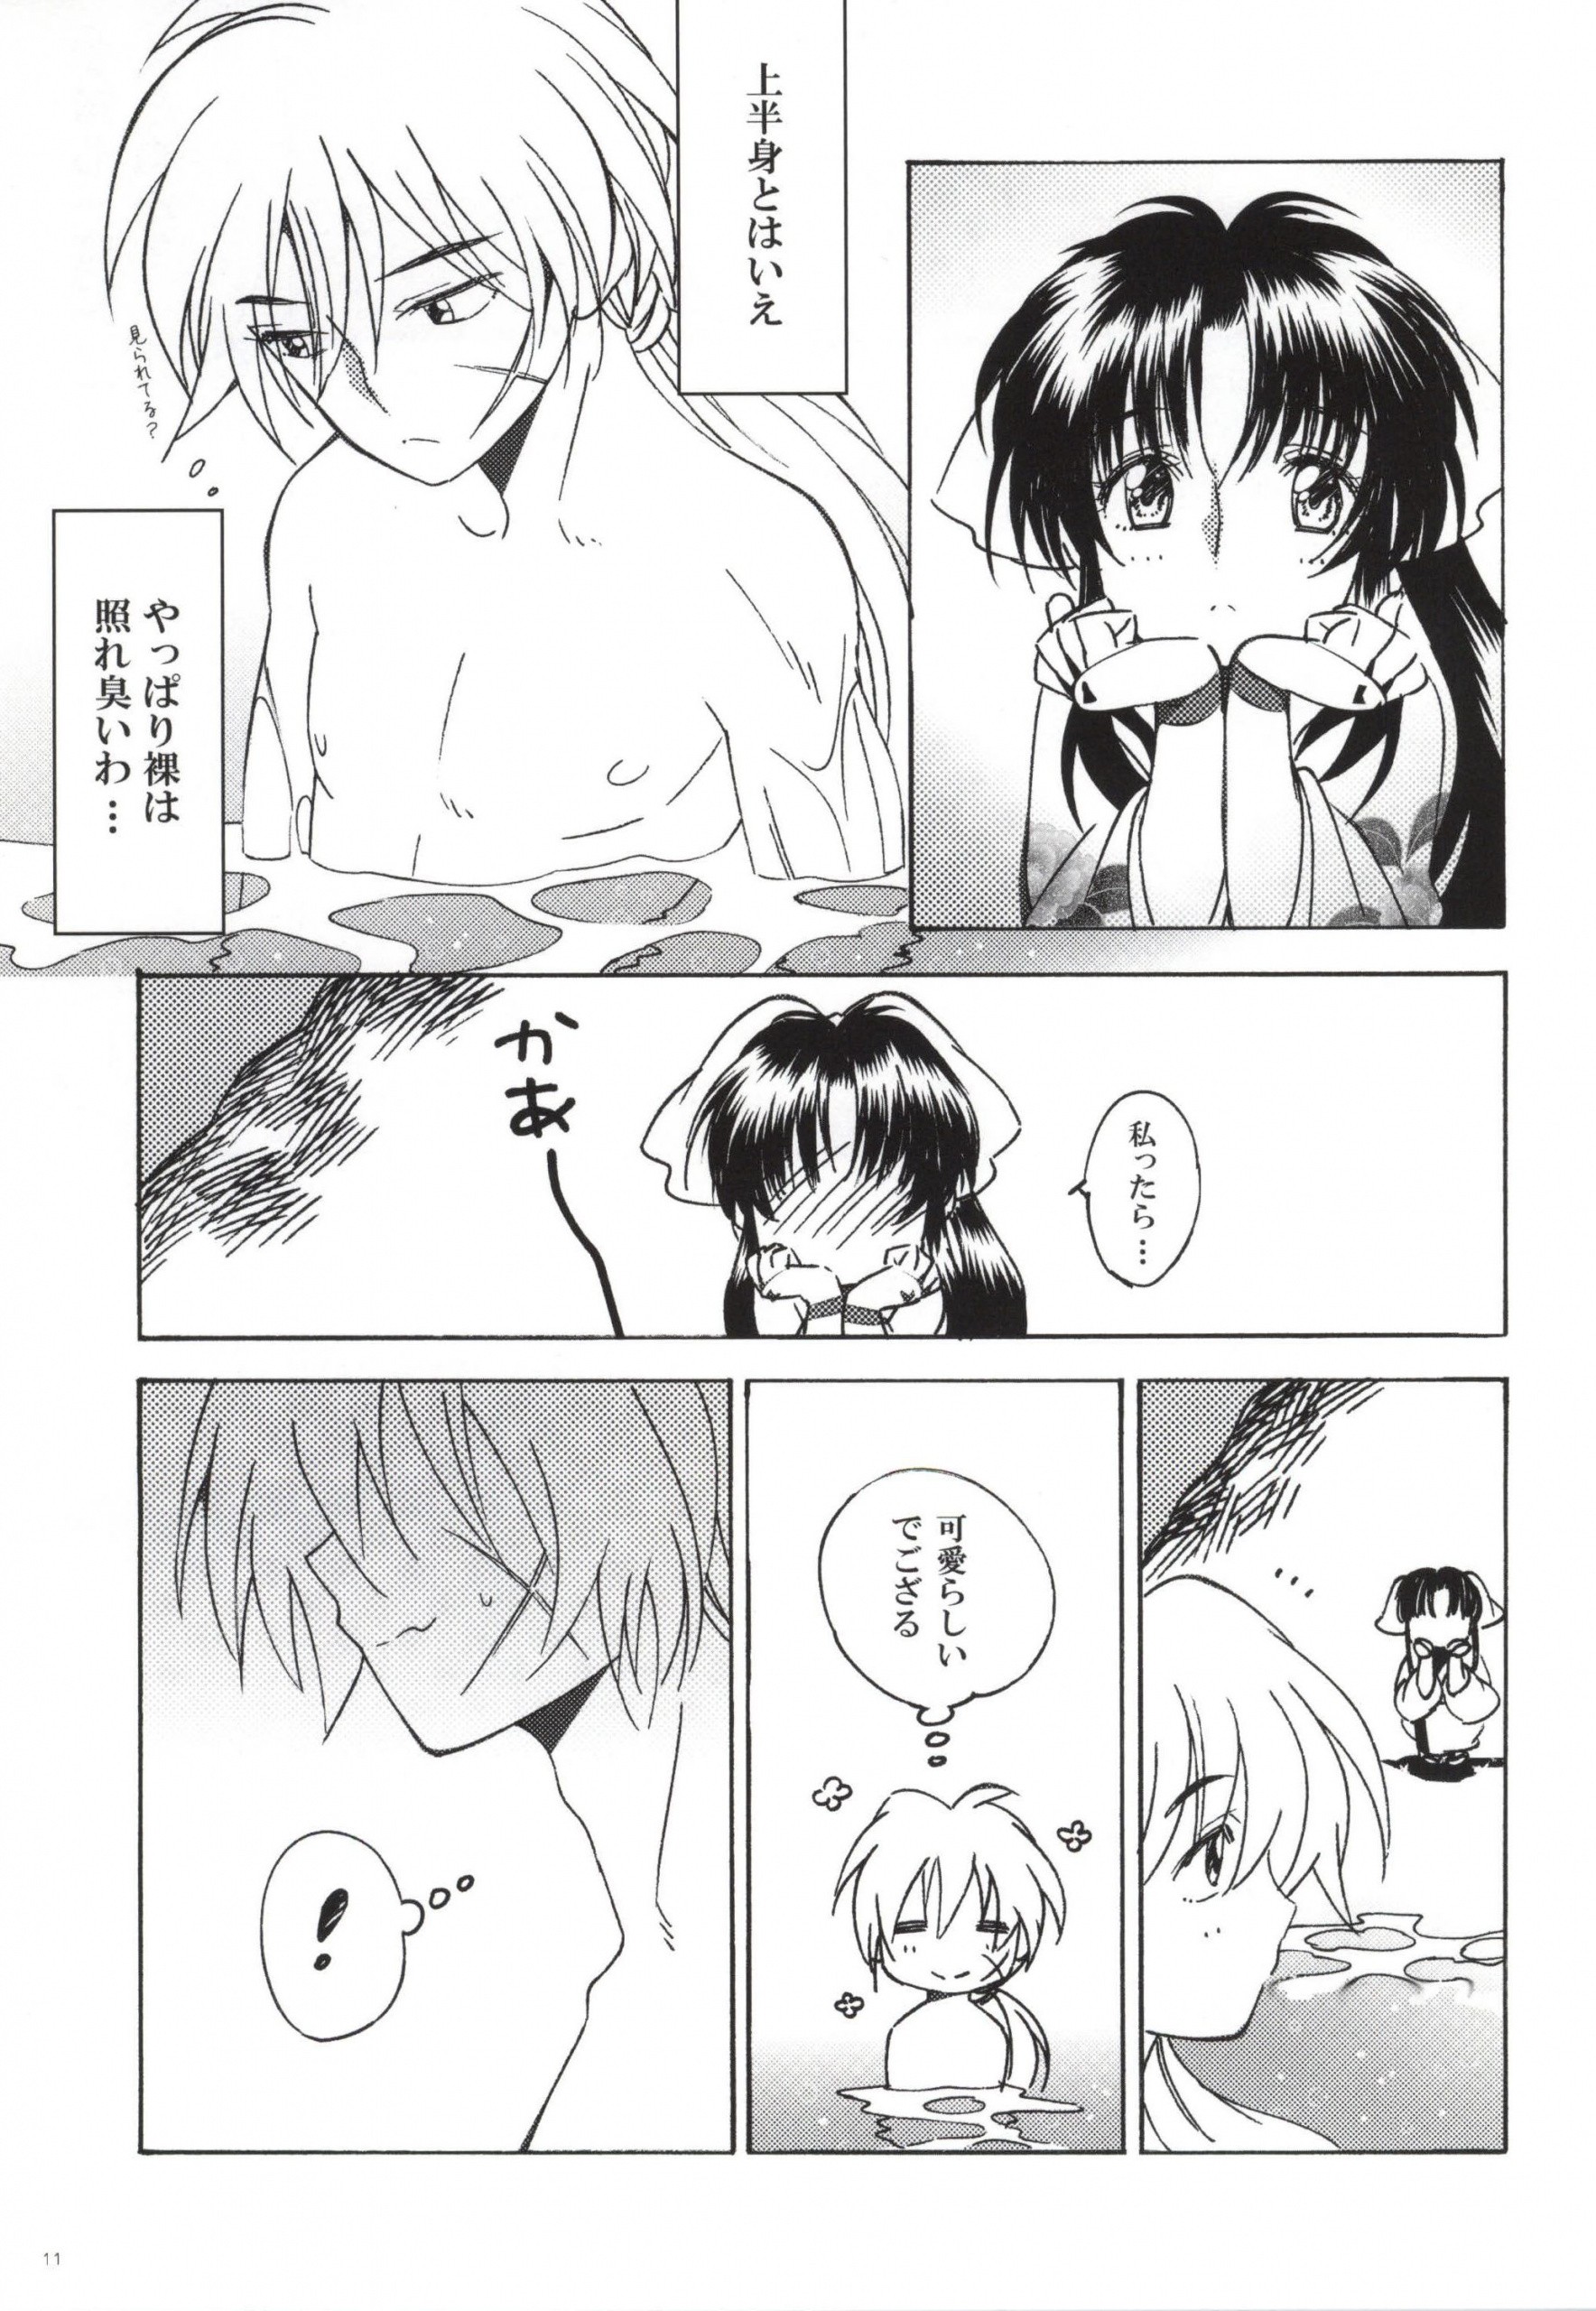 Sazanami Romantica hentai manga picture 7